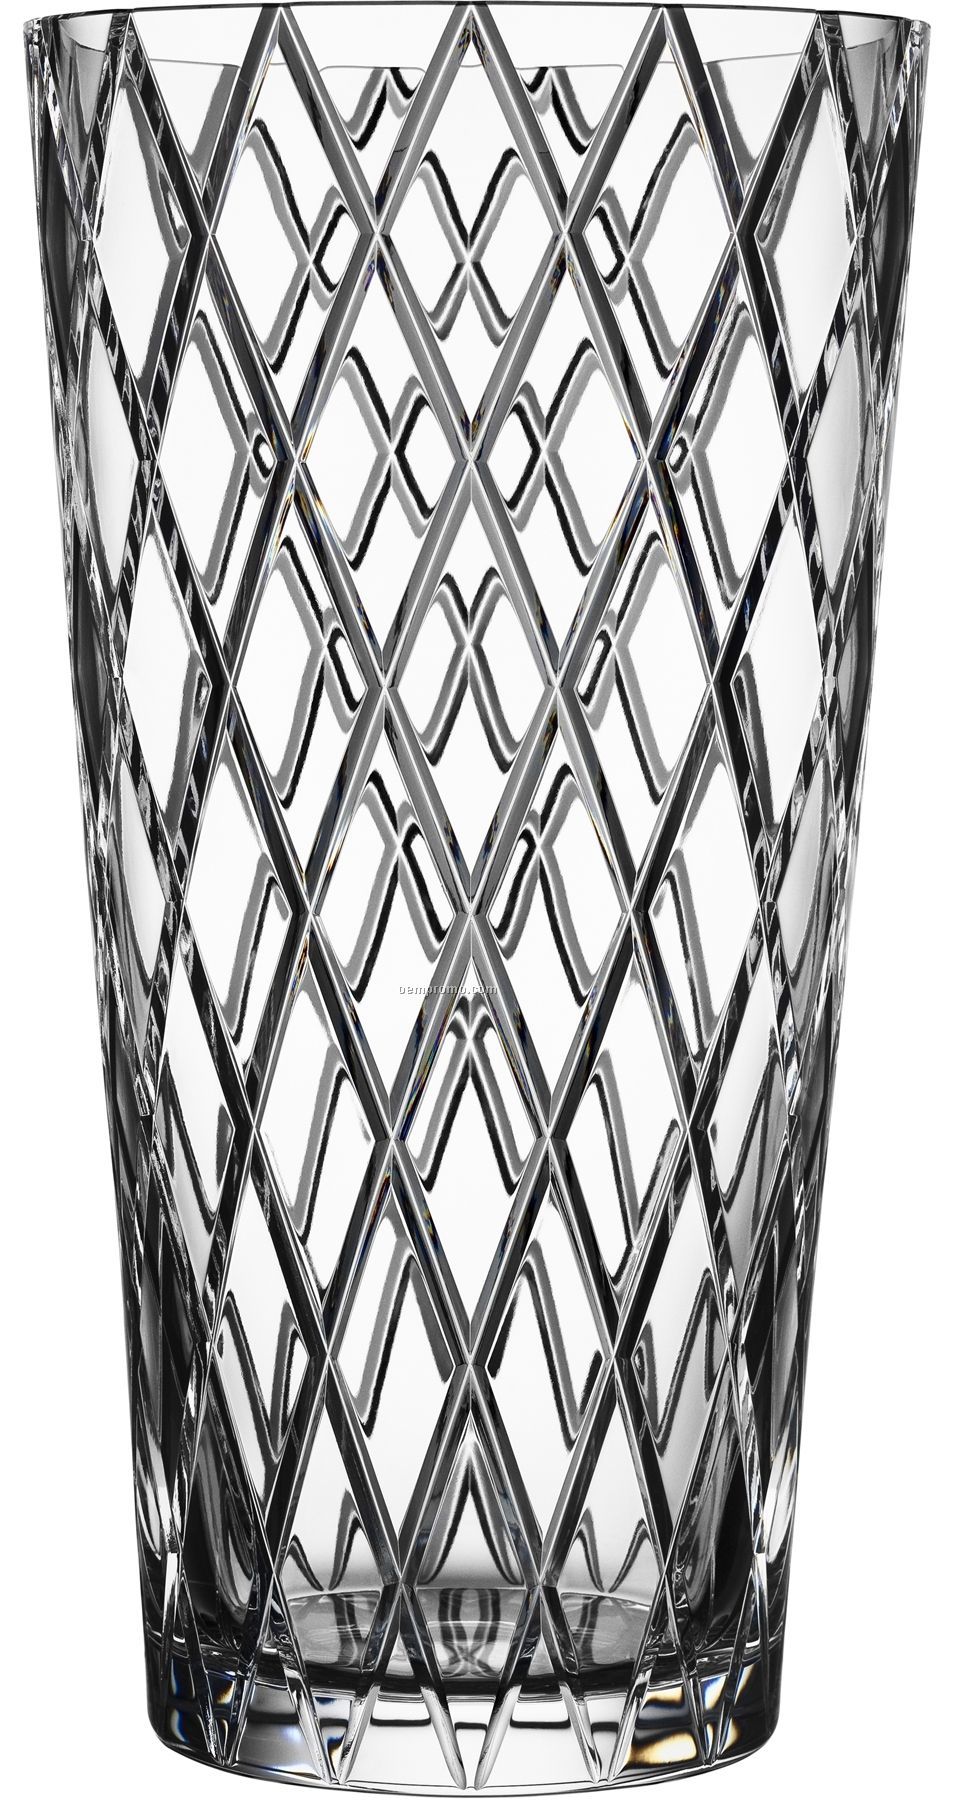 Chess Crystal Vase W/ Diamond Pattern By Ingegerd Raman